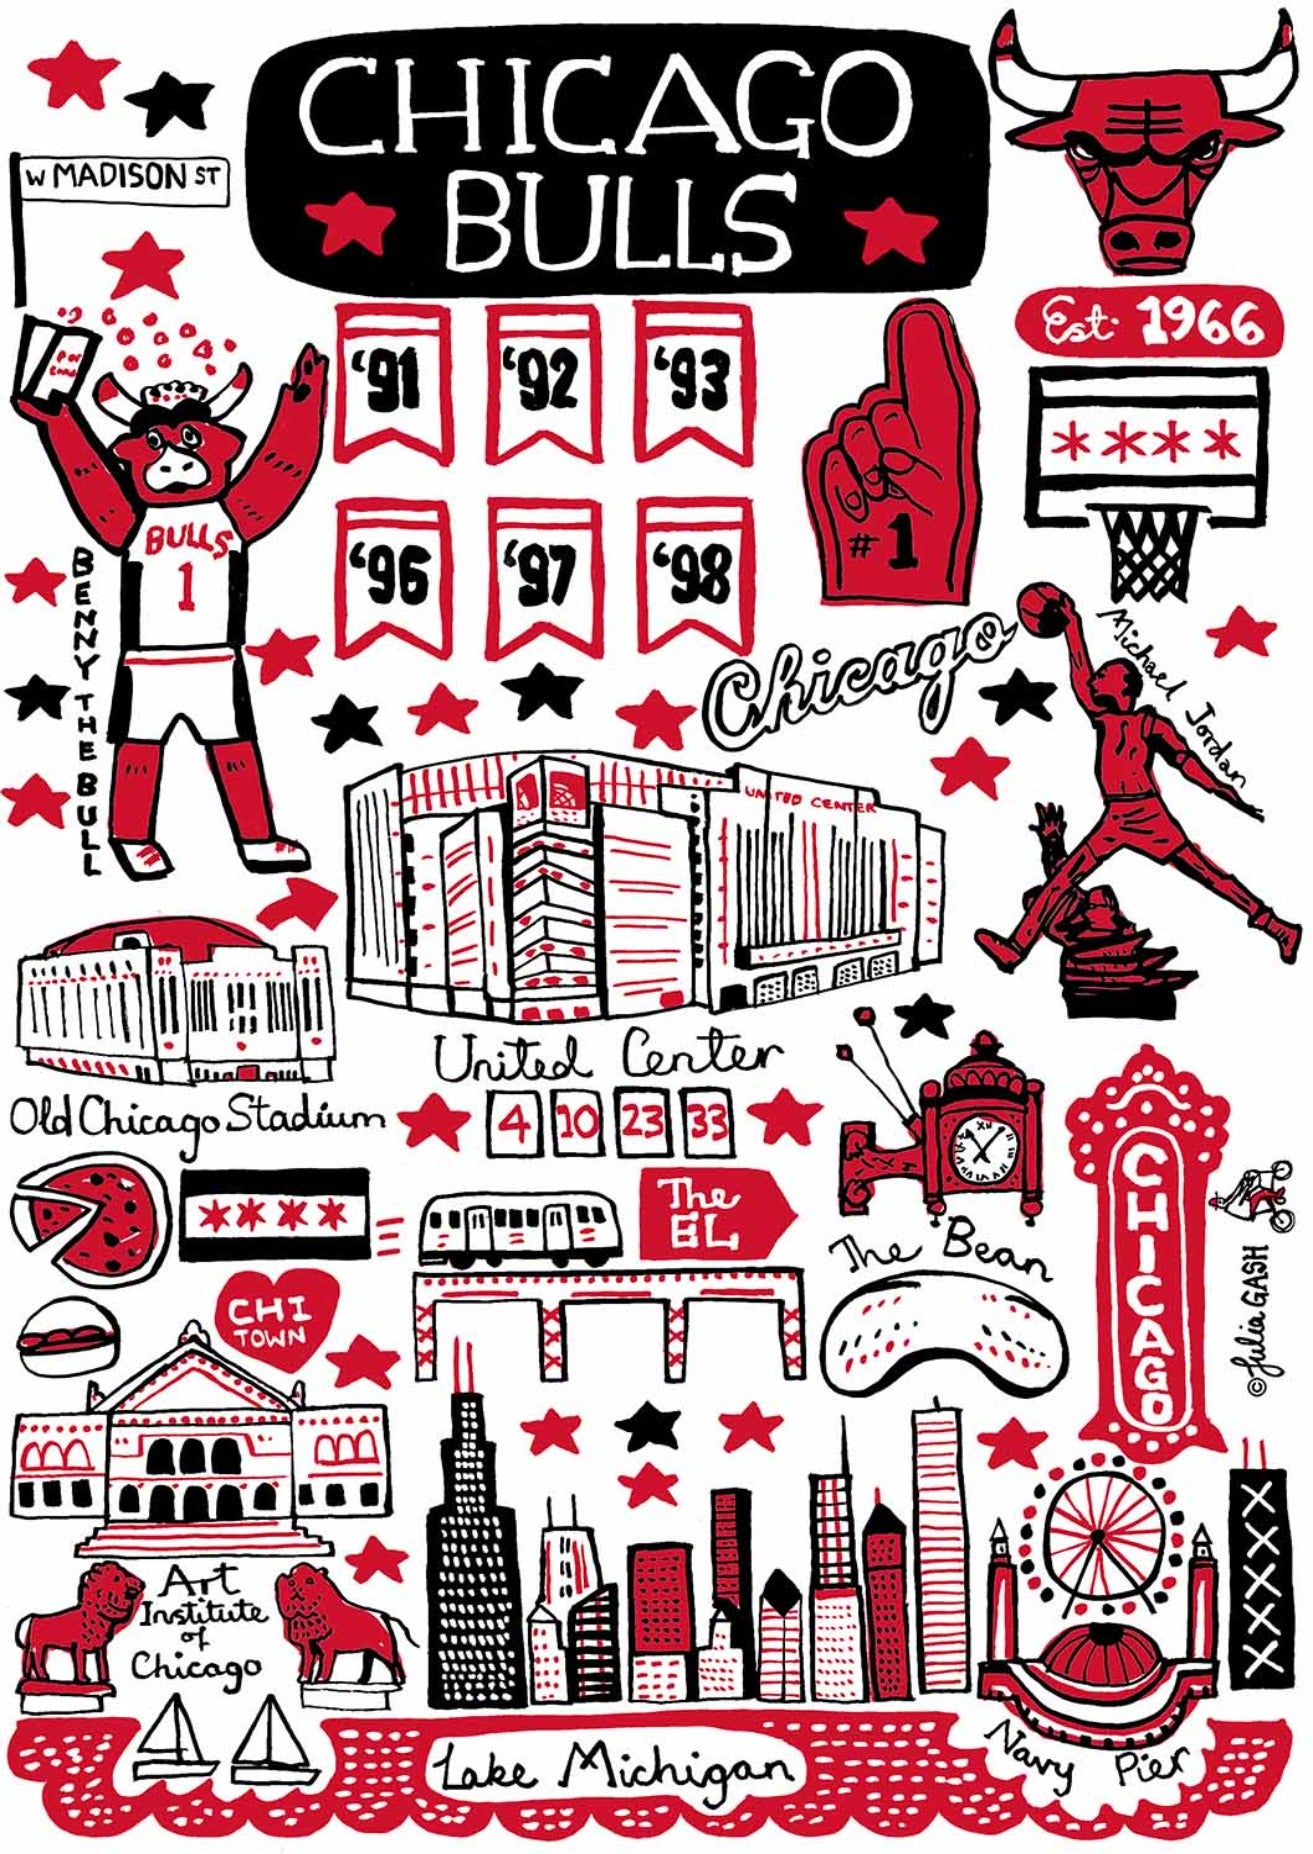 Chicago Bulls by Julia Gash